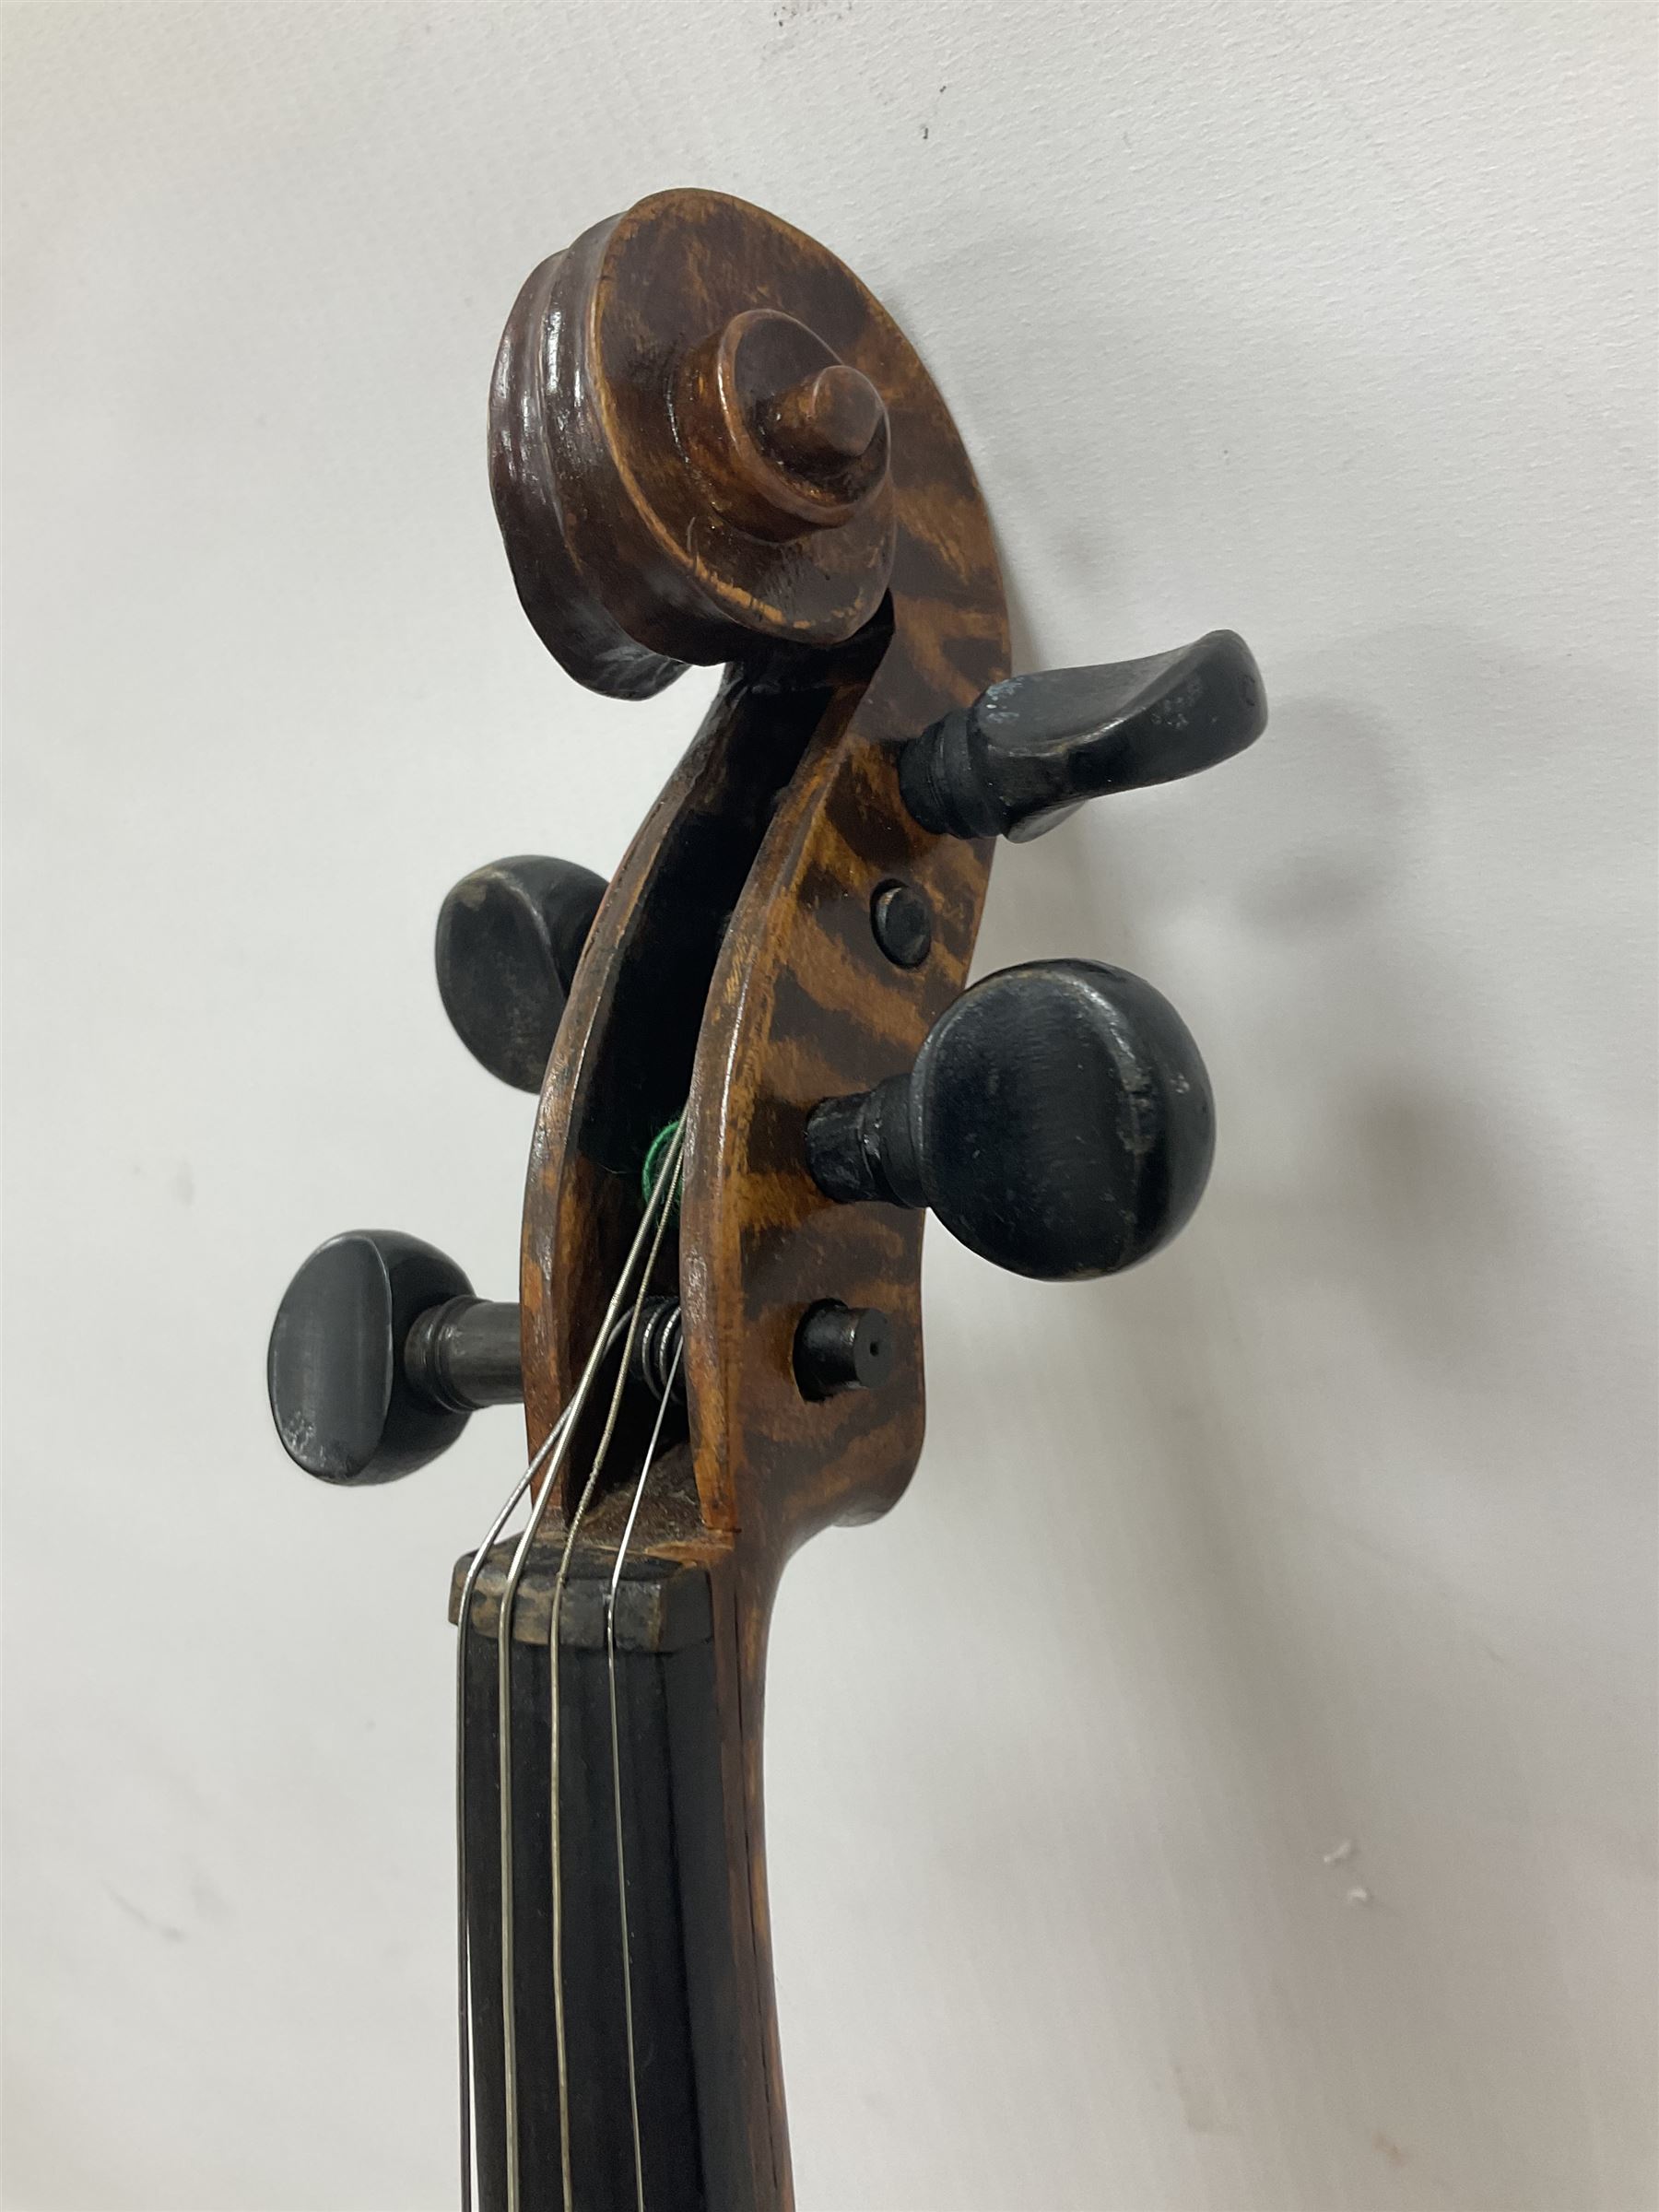 Copy of a full size Stradivarius violin - Image 5 of 12